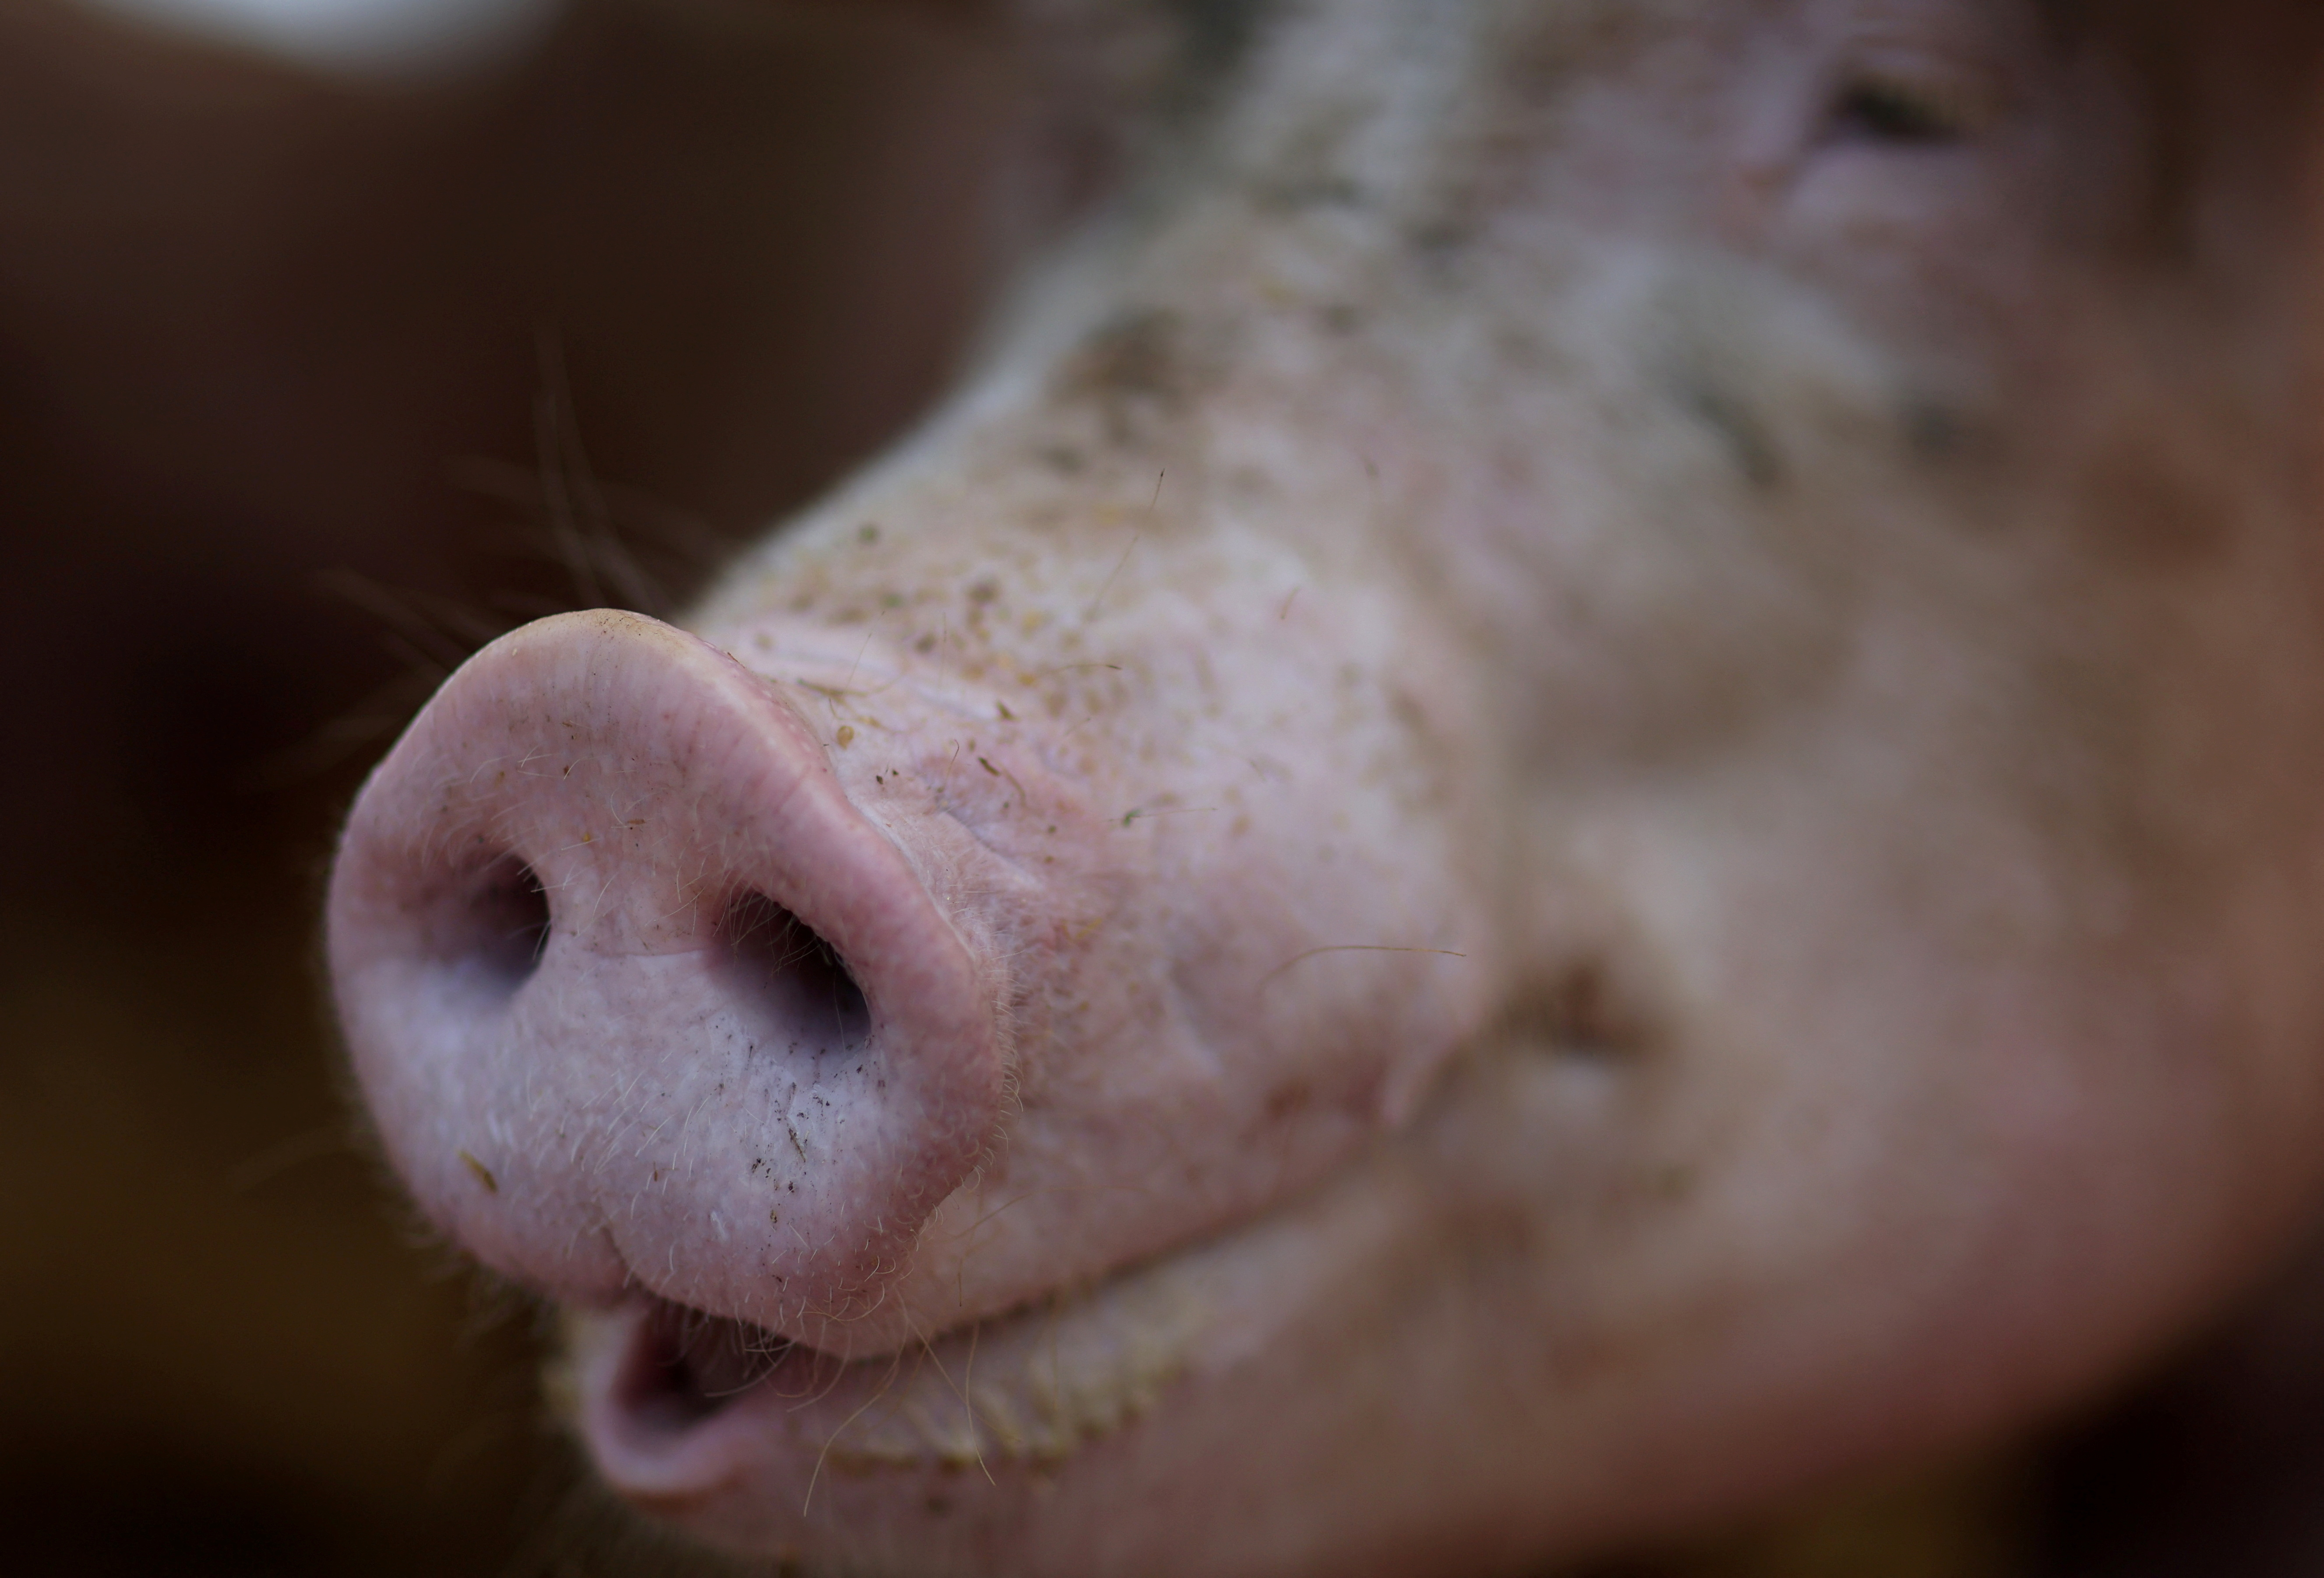 A pig farm located in Maryland, U.S.